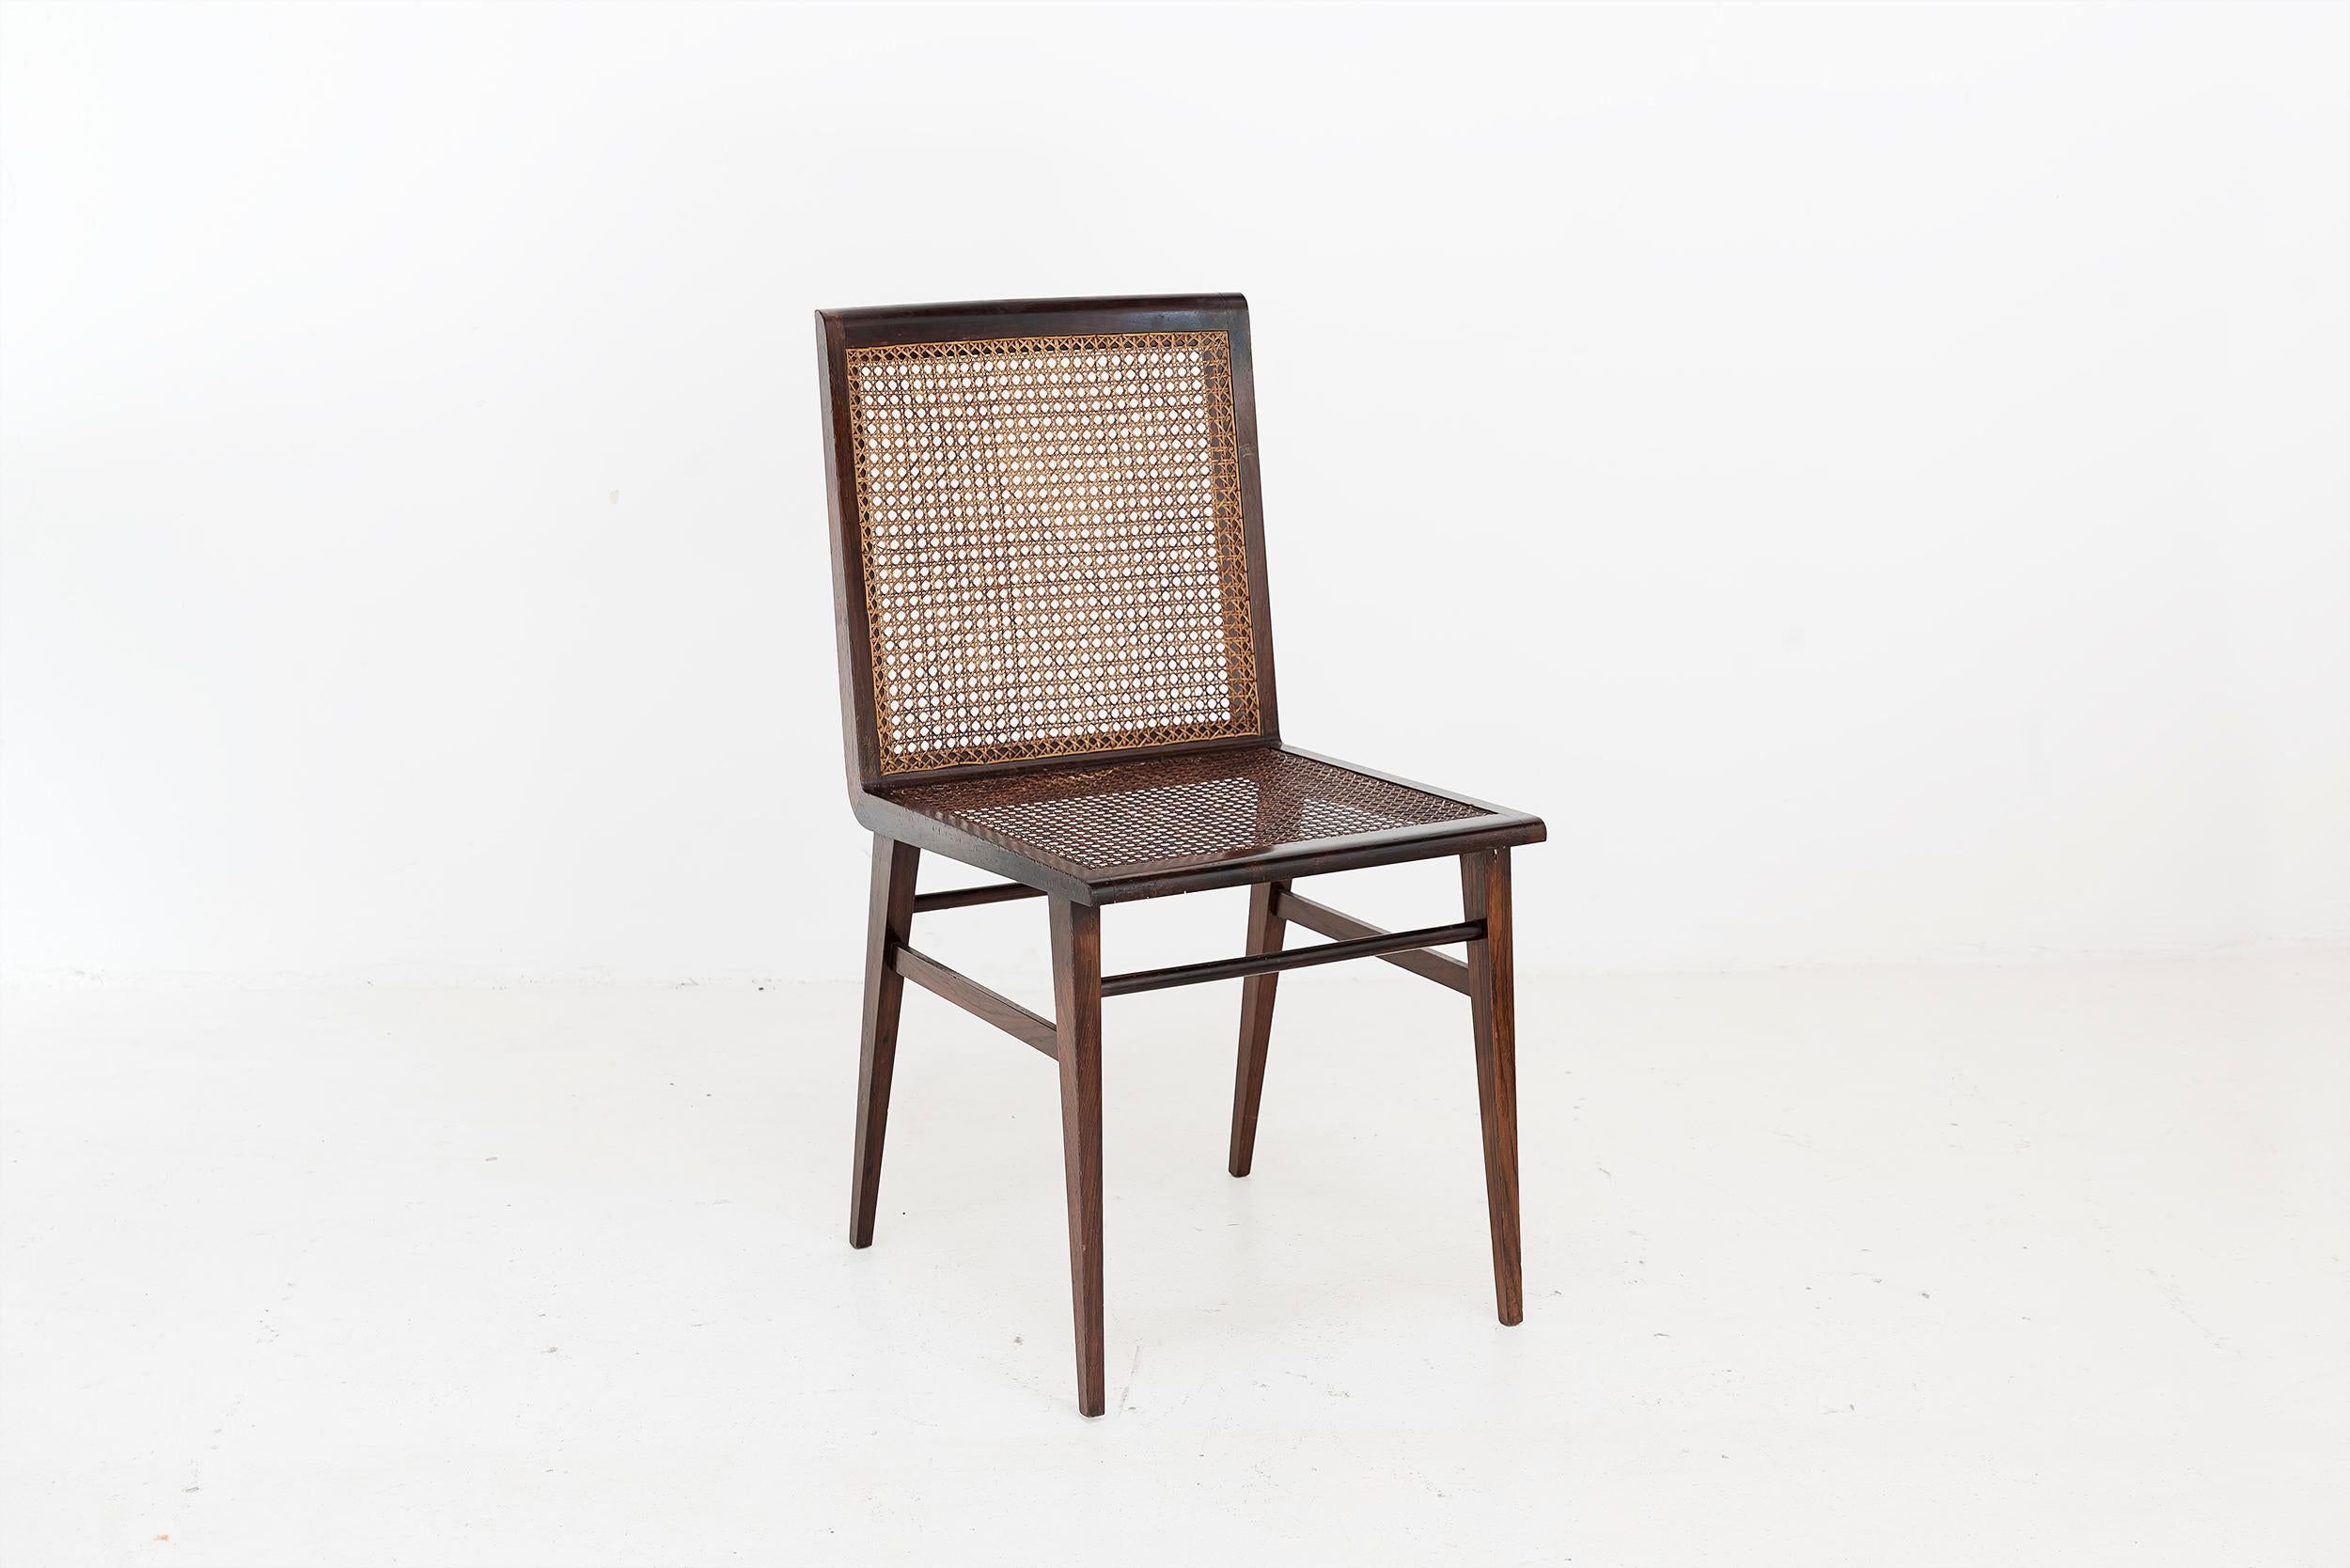 Joaquim Tenreiro, Set of 8 Chairs Variant of the “Cadeira baixa para quarto” In Good Condition For Sale In Barcelona, ES